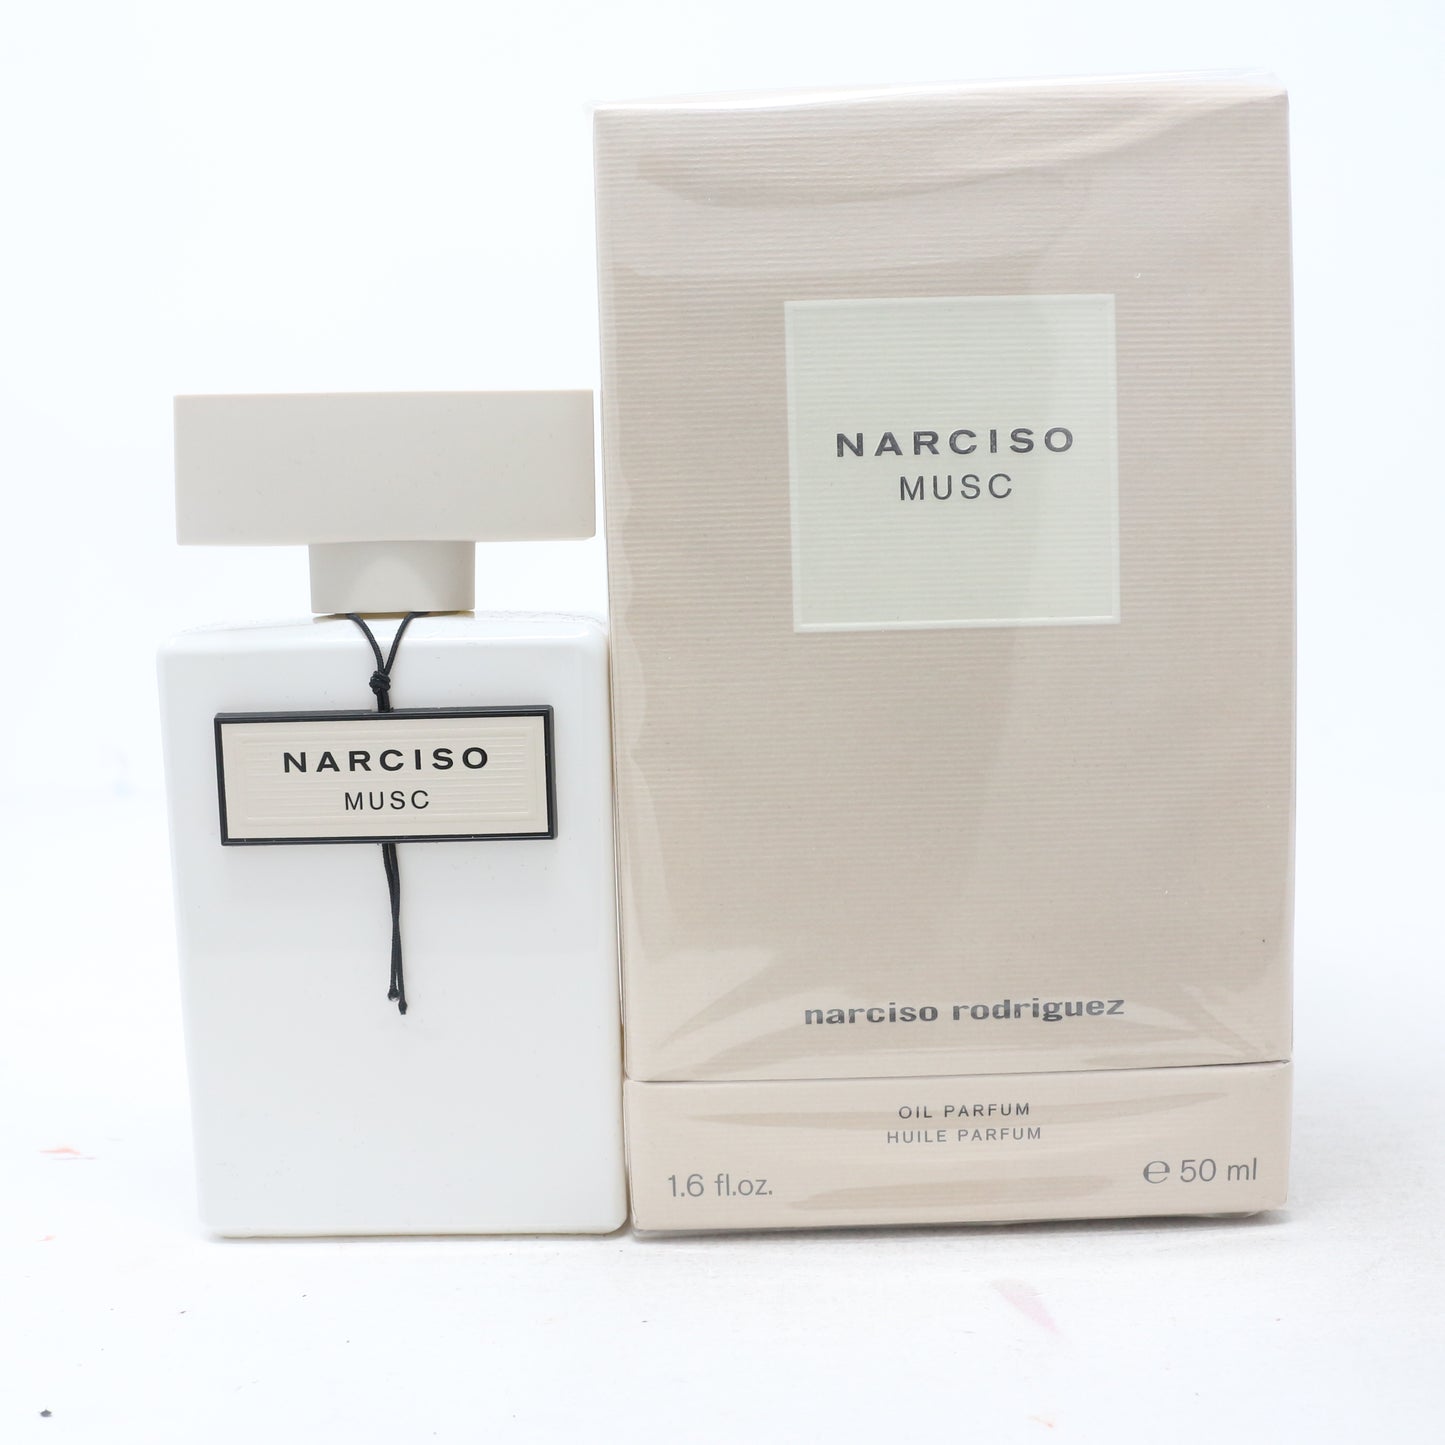 Narciso Musc Oil Parfum 50 ml